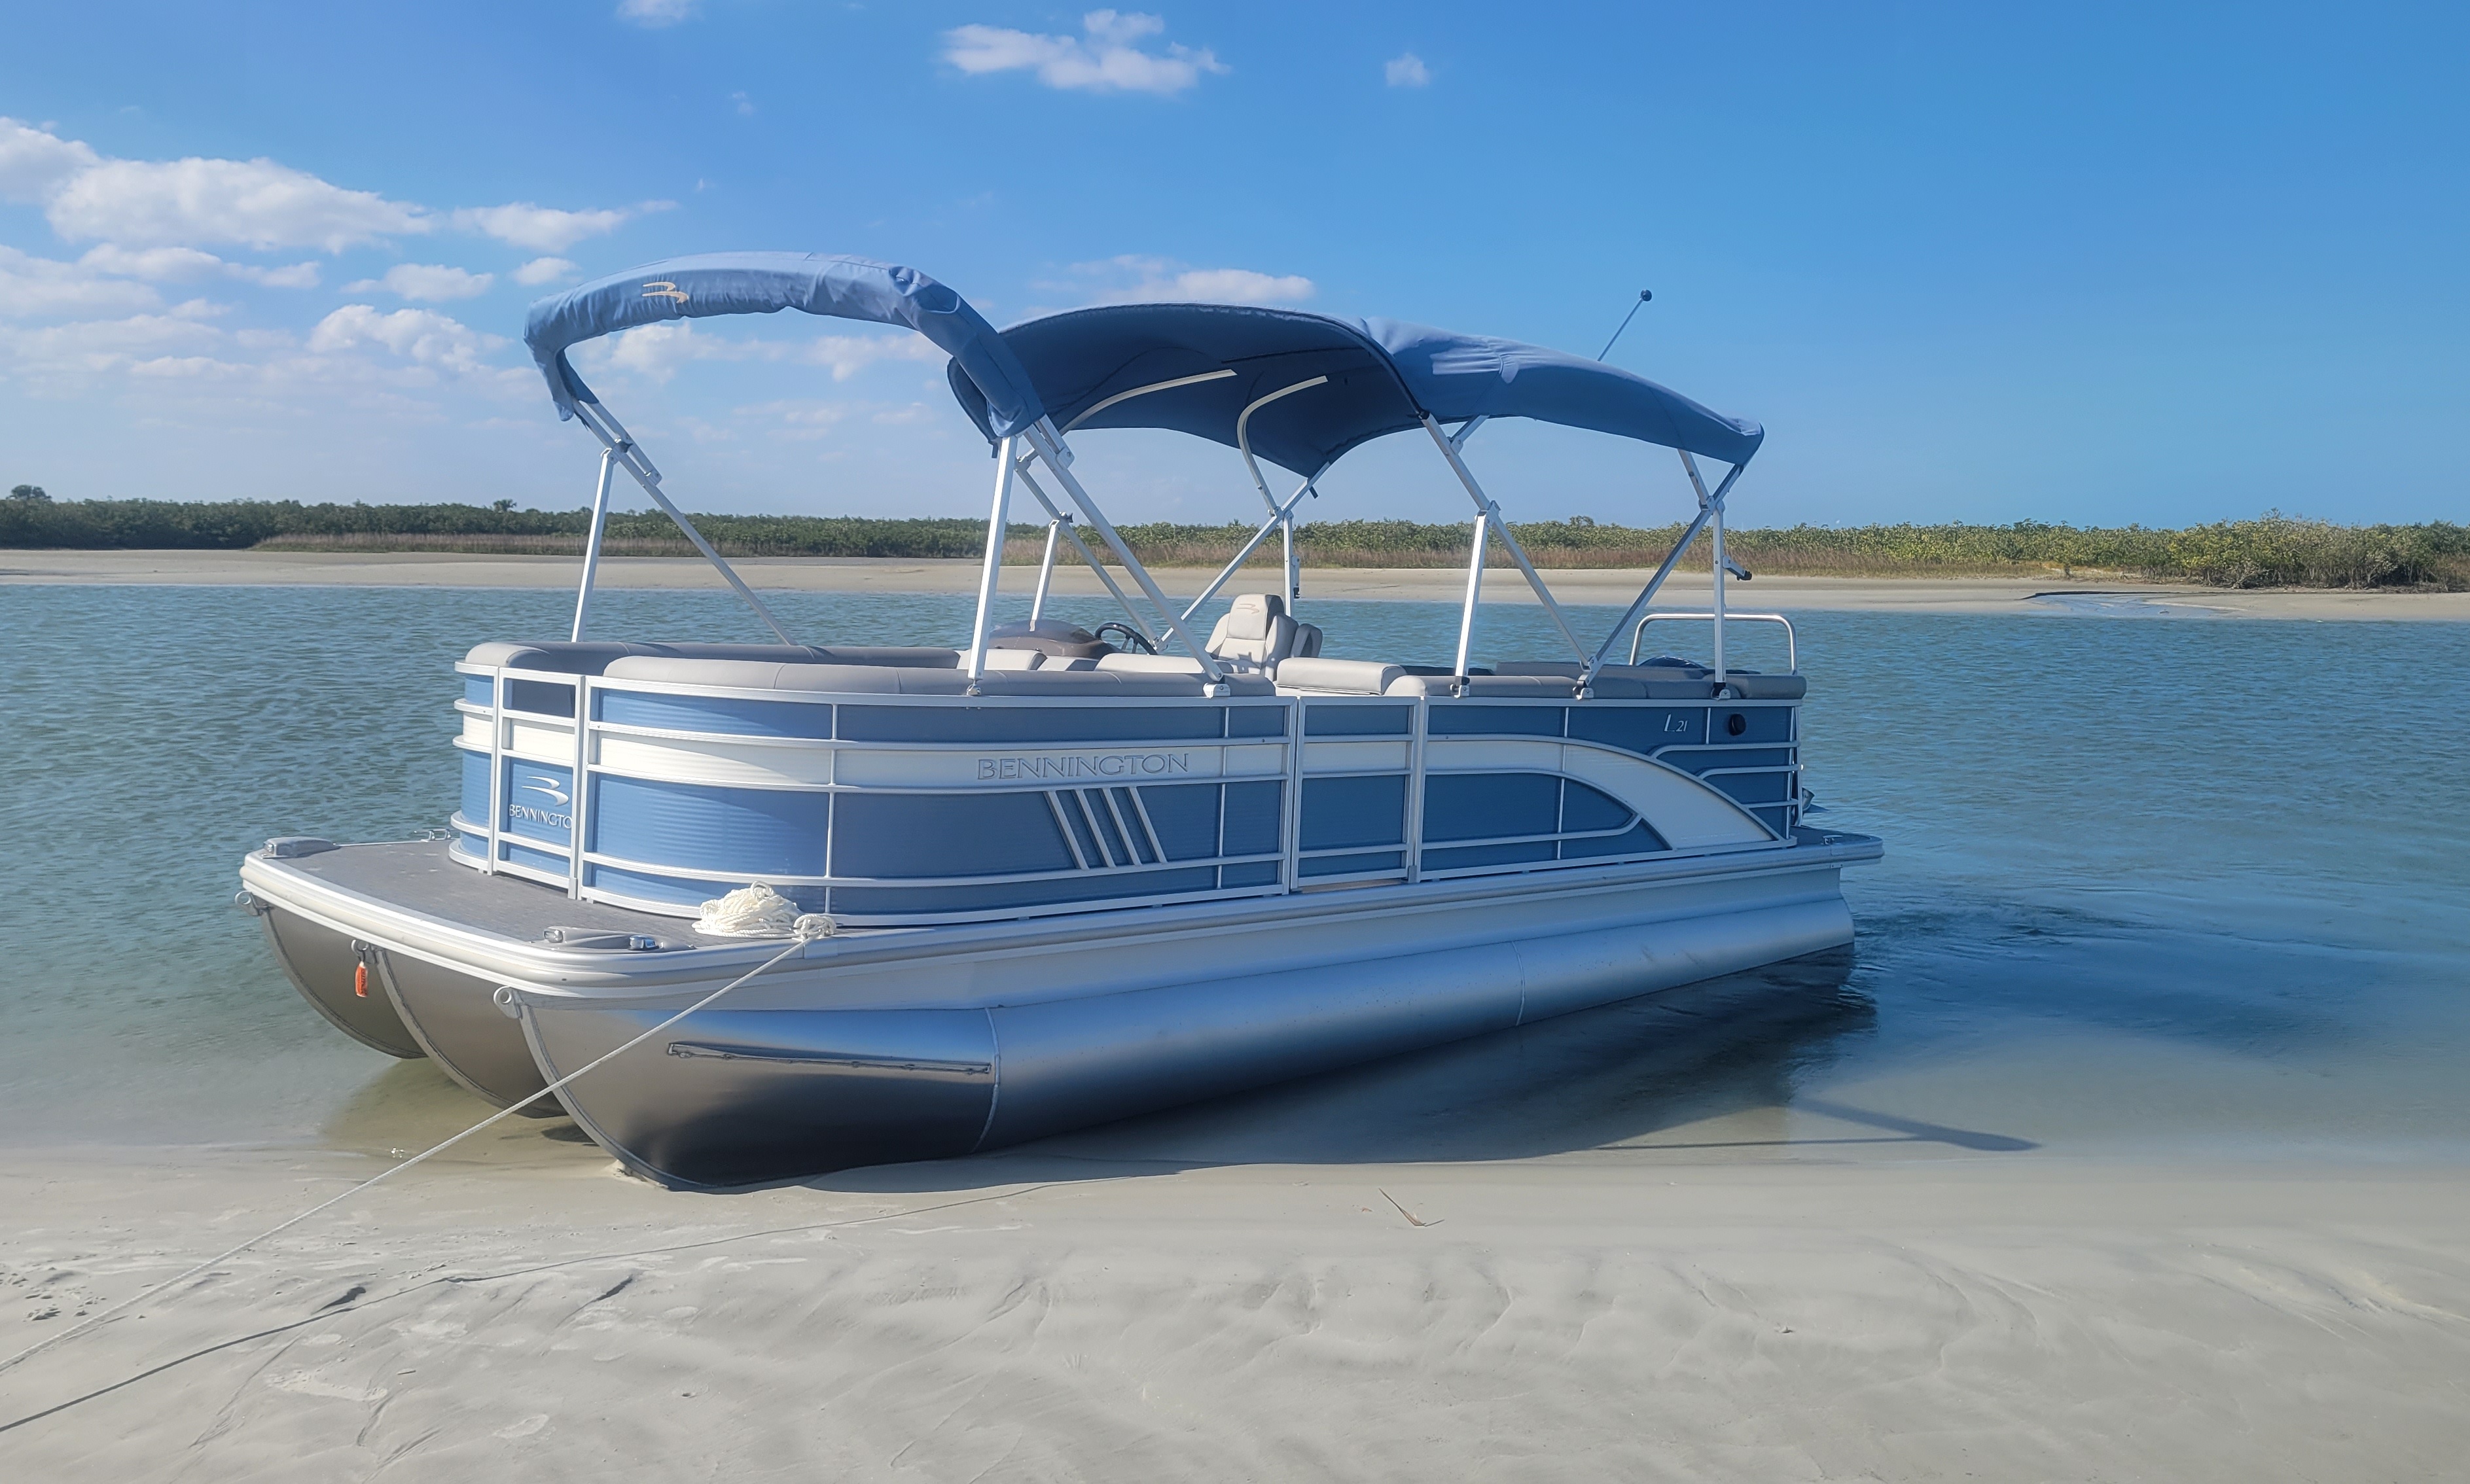 Daytona Beach Boat Rentals From $80/Hour GetMyBoat